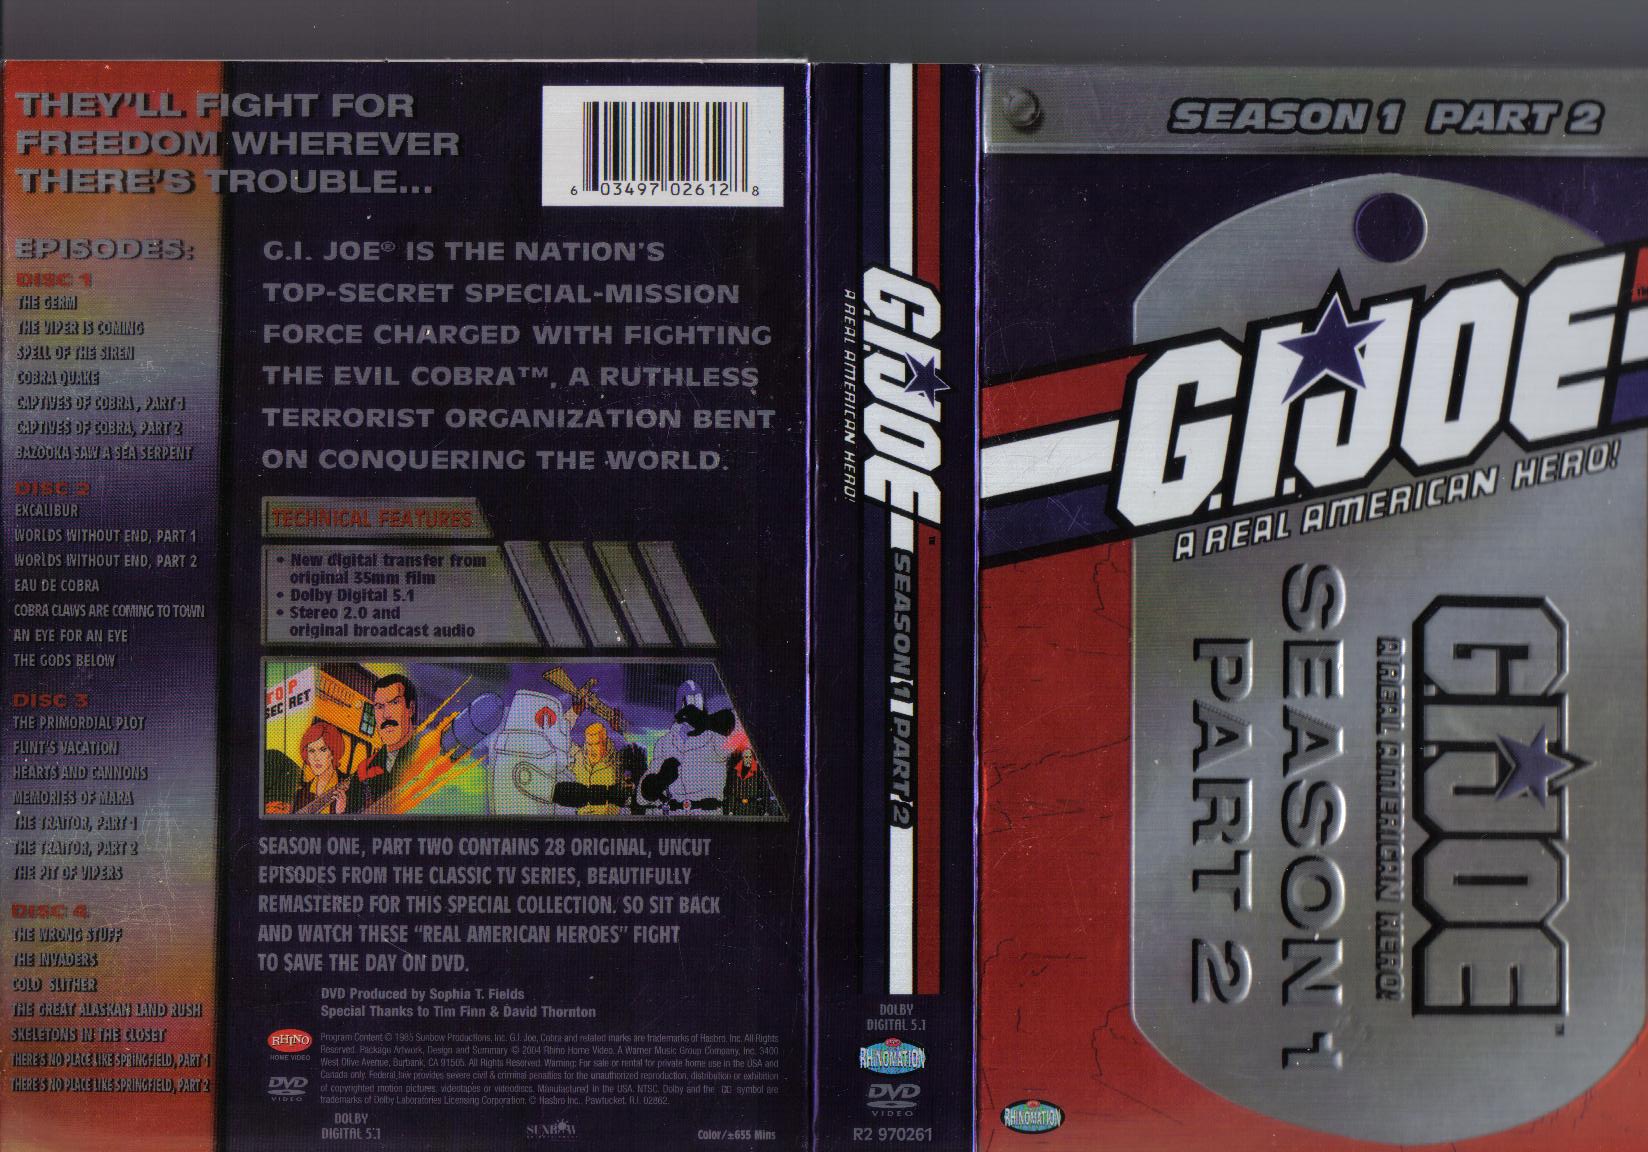 Jaquette DVD GI Joe saison 1 vol 2 Zone 1